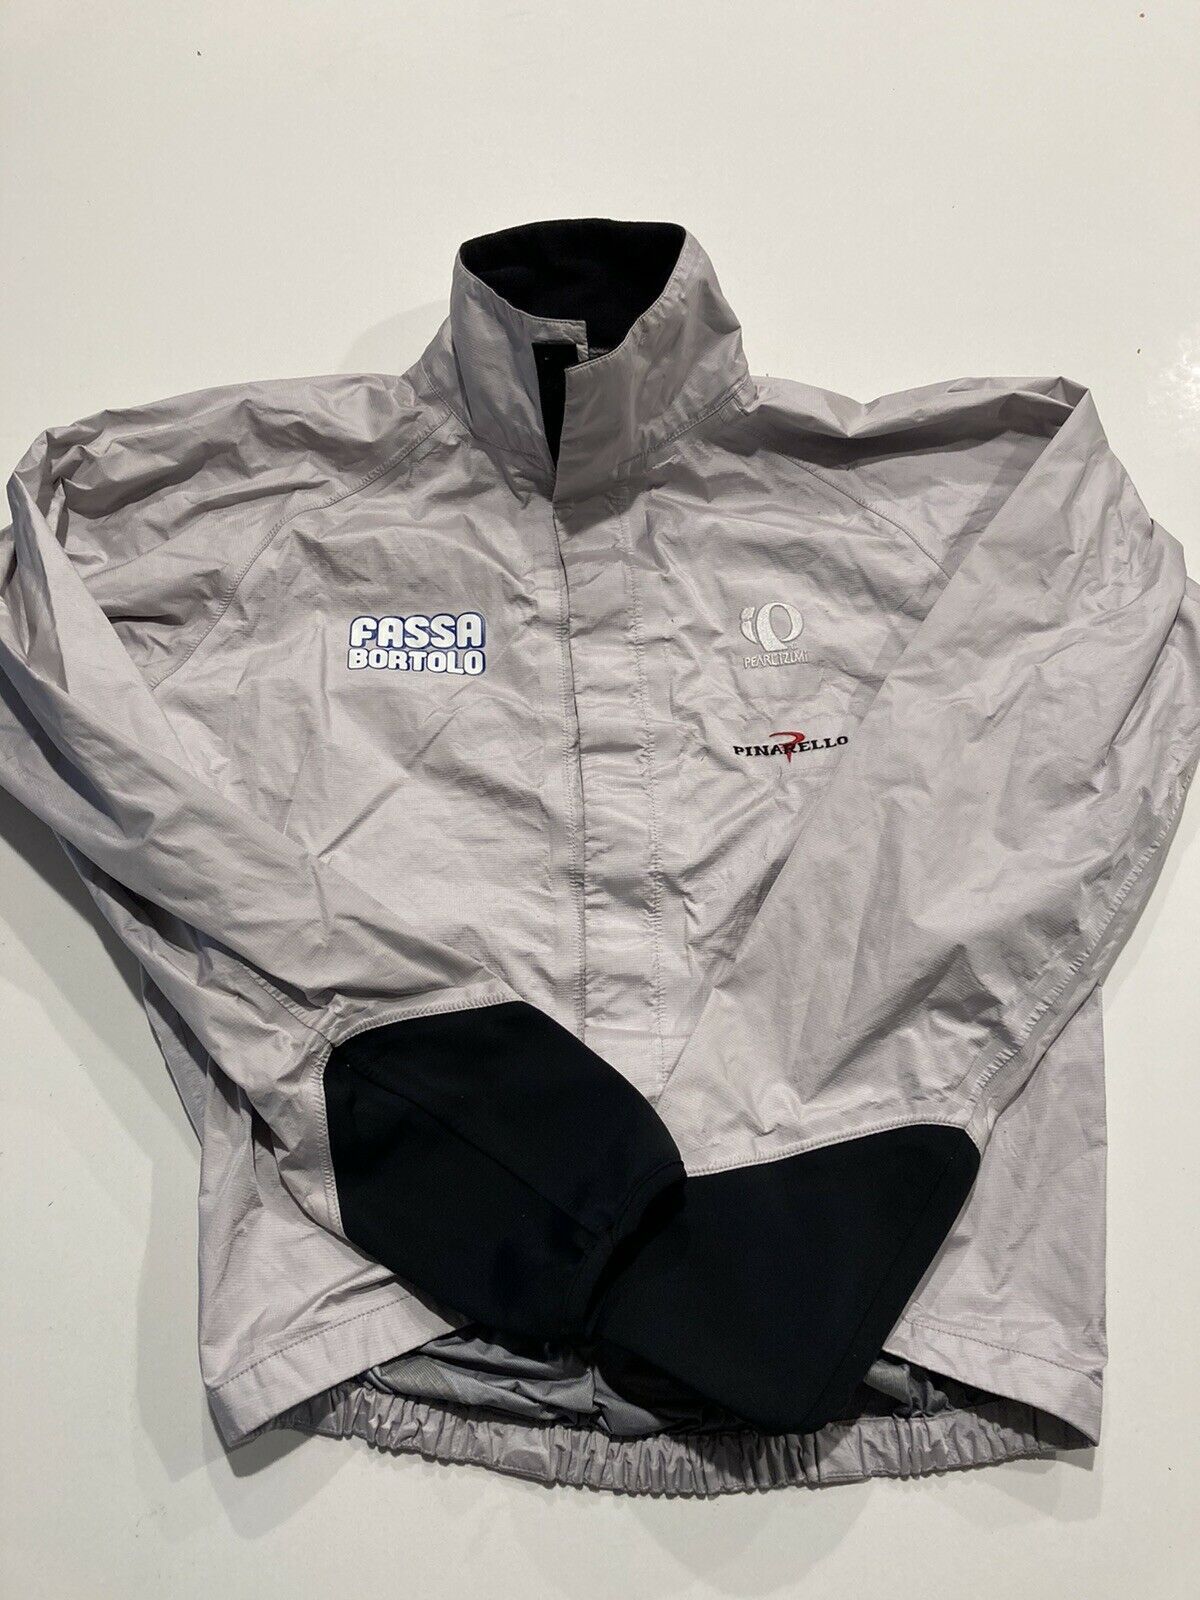 eBay Finds: Pearl Izumi Fassa Bortolo race rain jacket | Cyclingnews